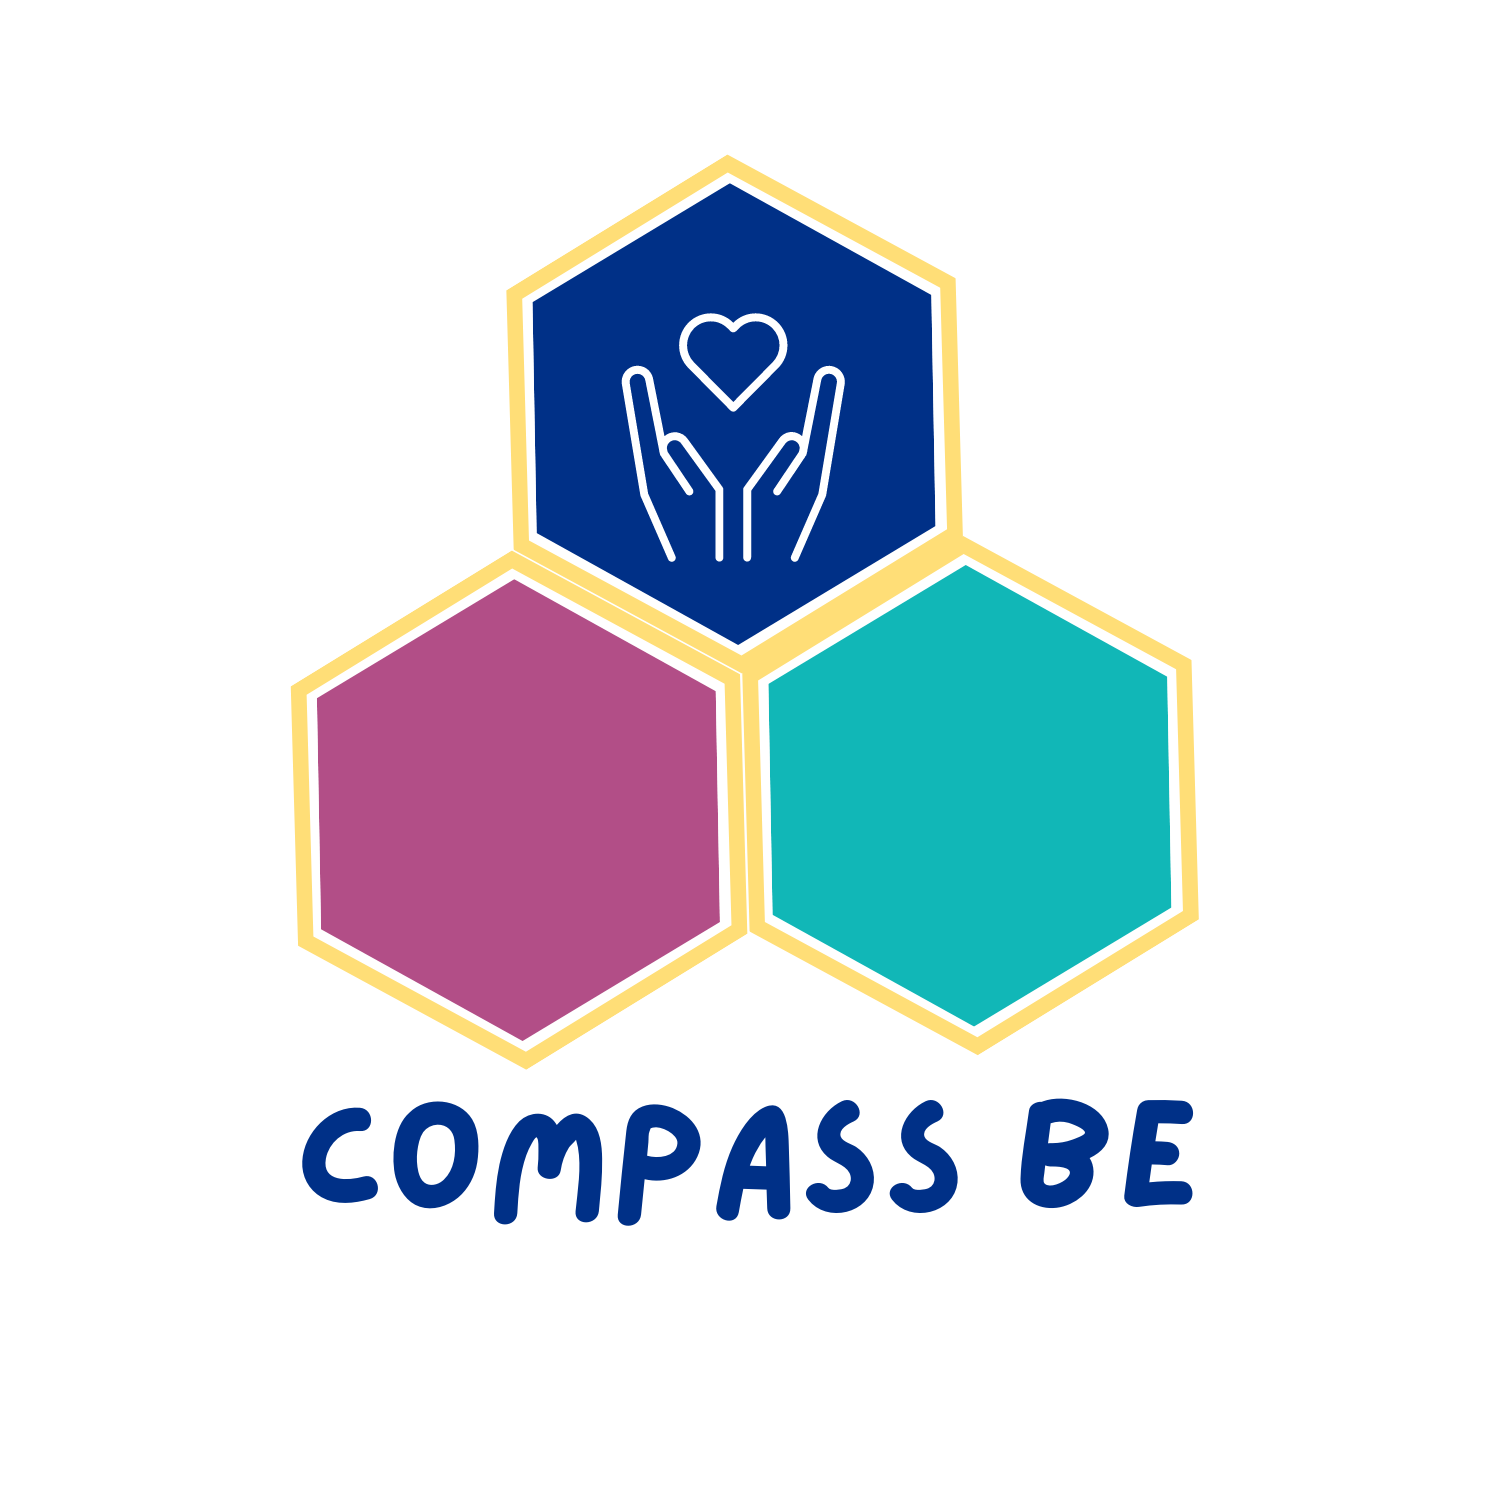 Compass Be logo